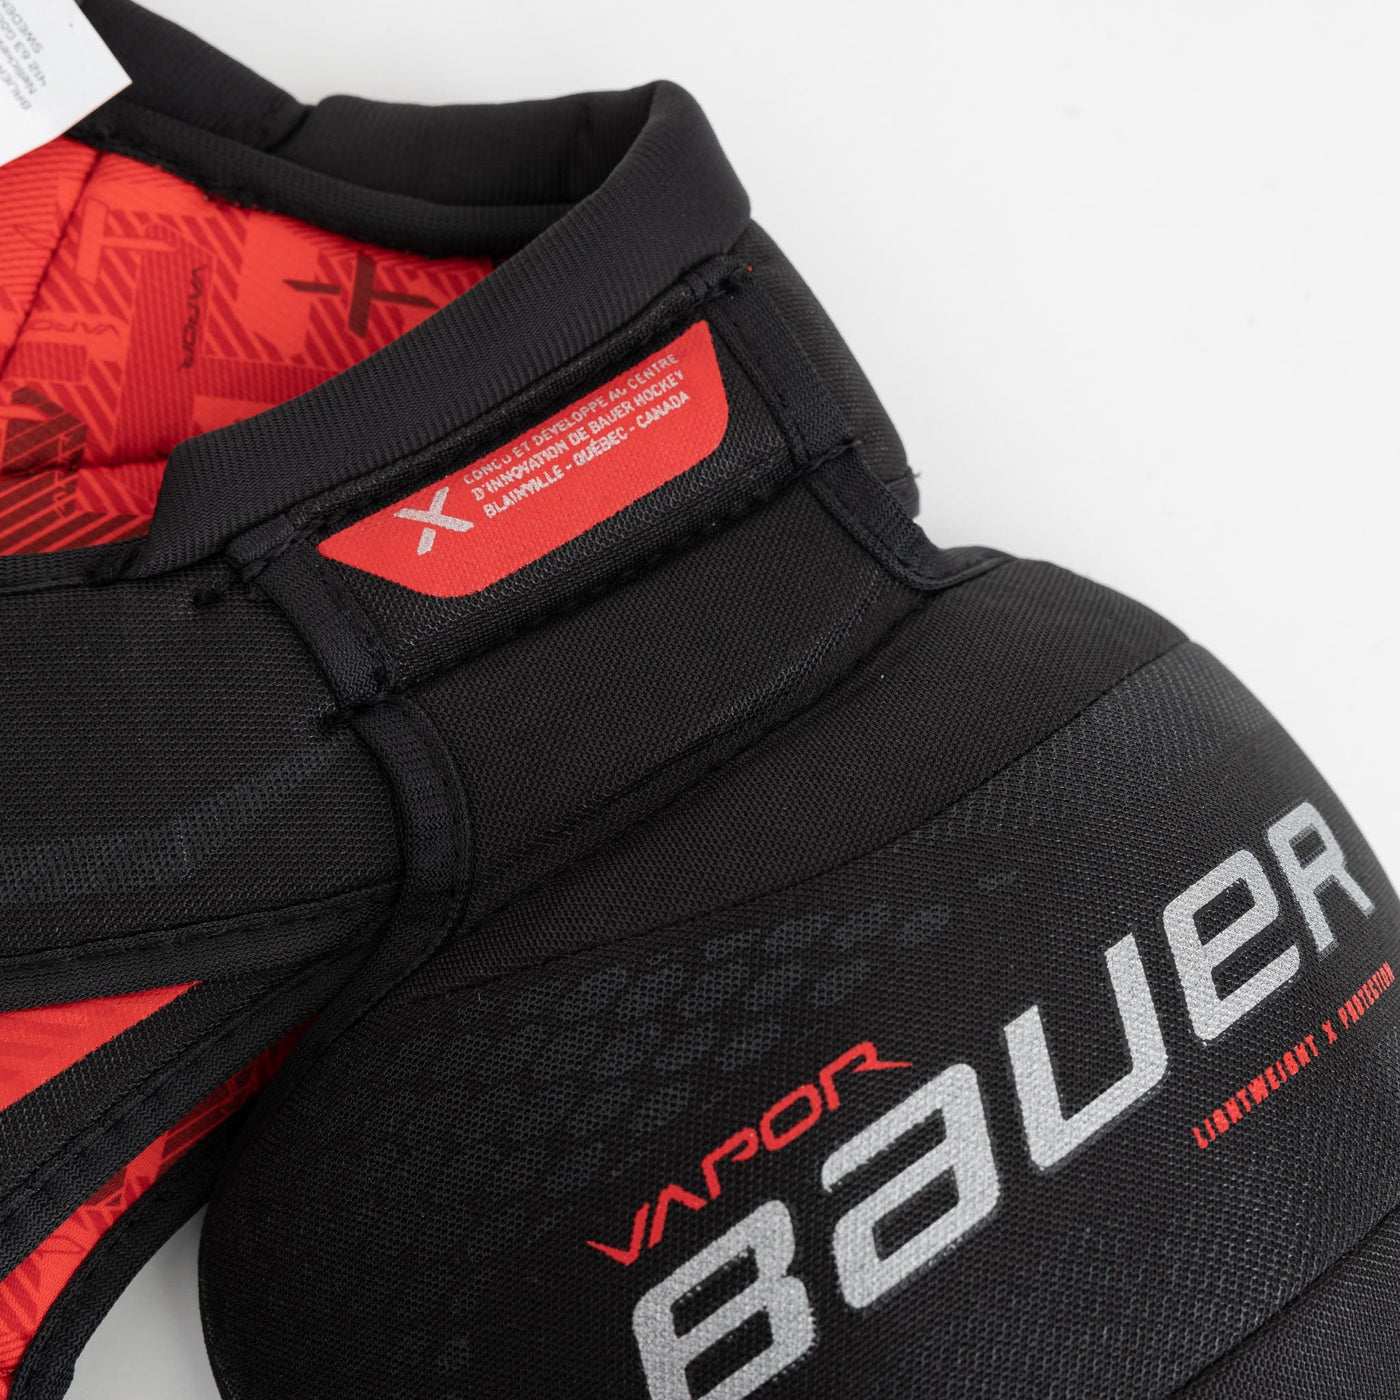 Bauer Vapor Velocity Junior Hockey Shoulder Pads - The Hockey Shop Source For Sports